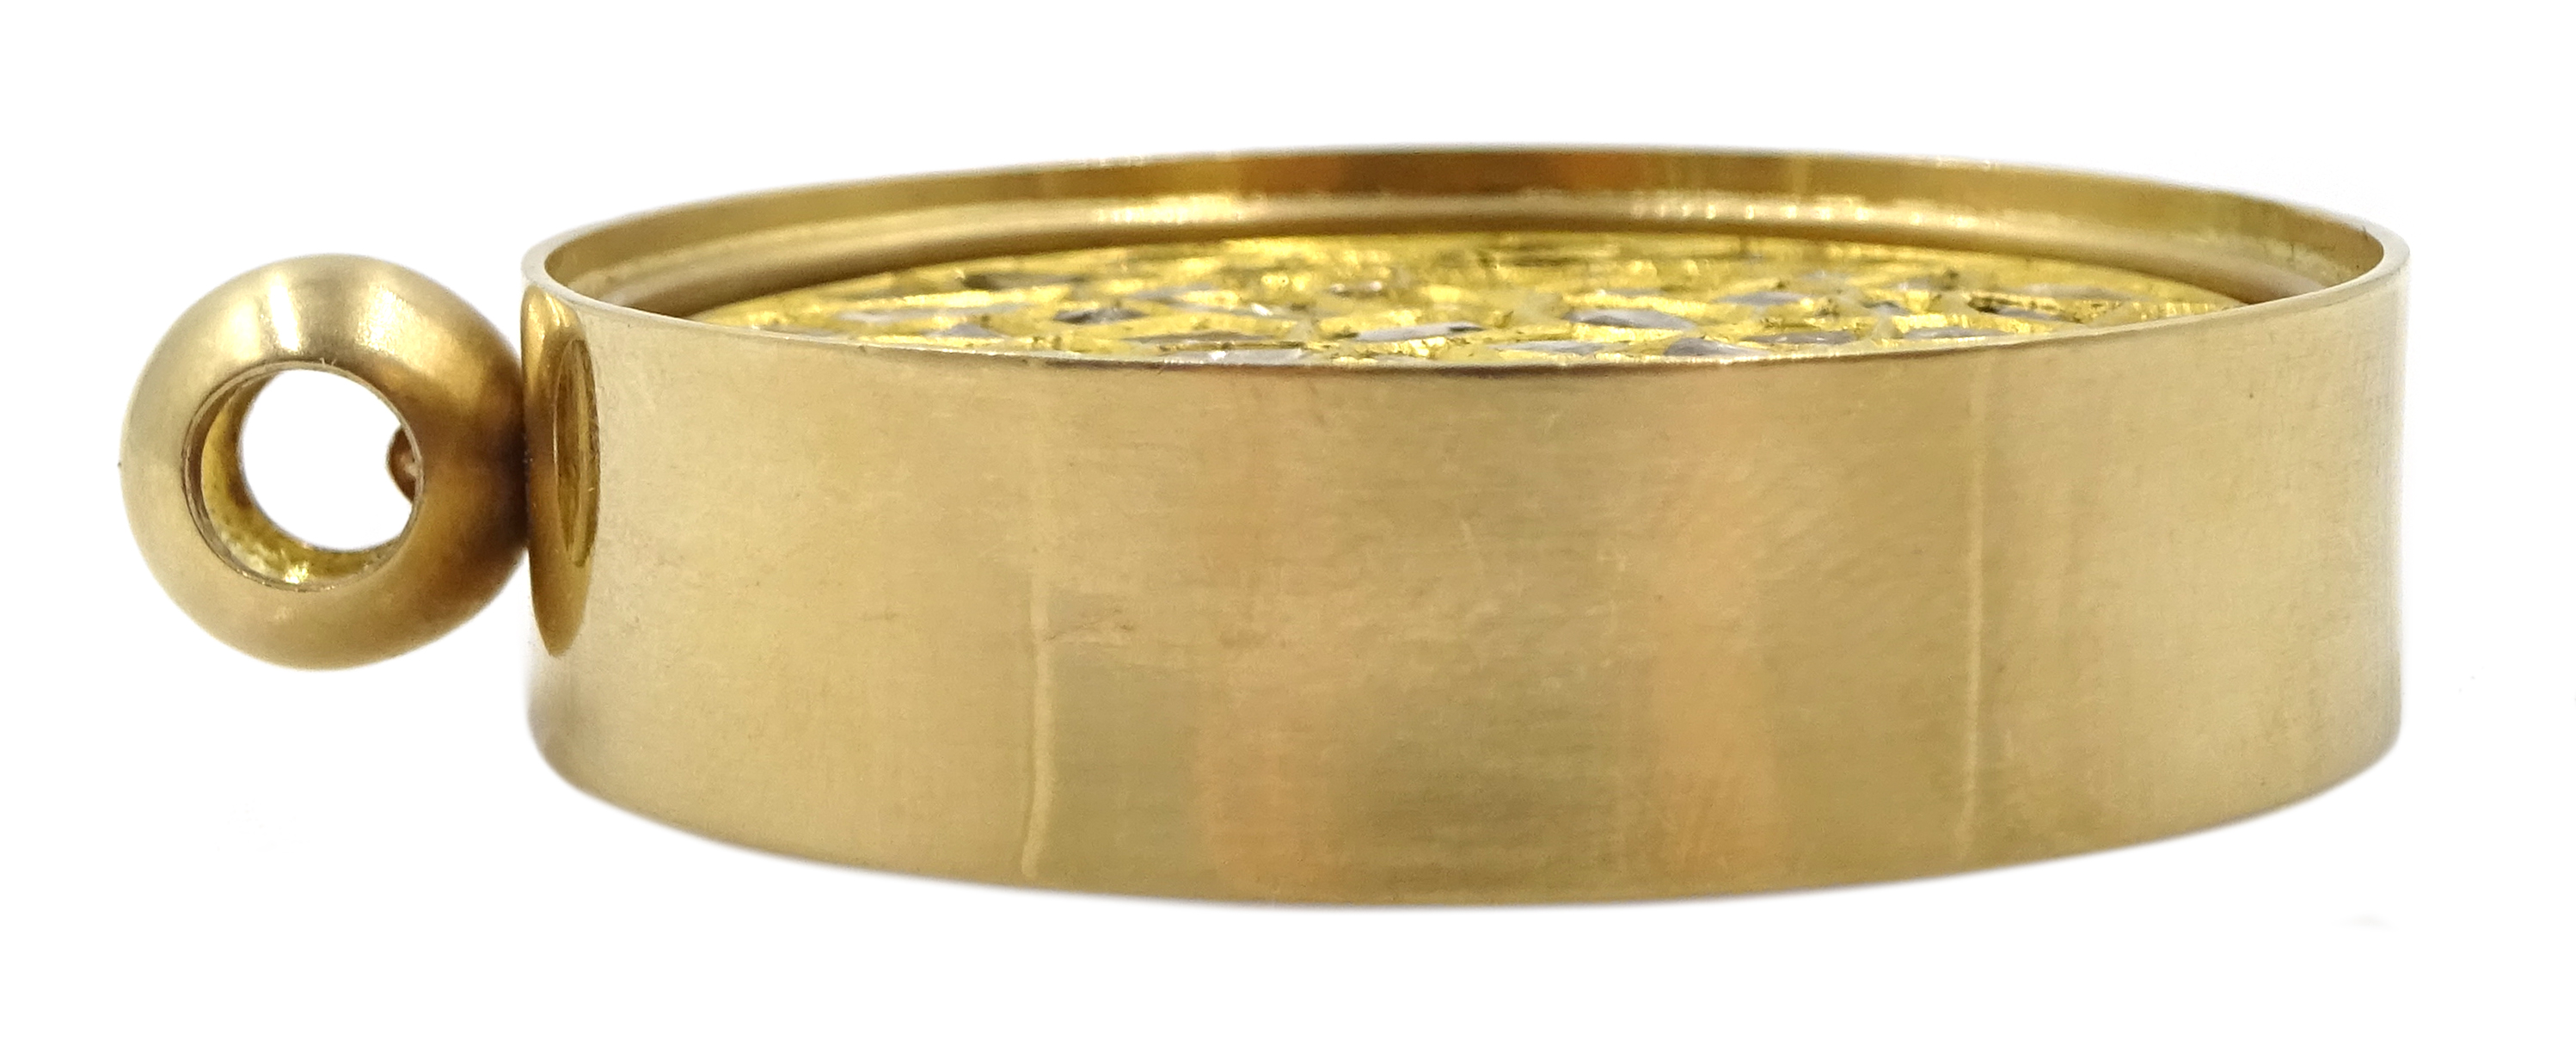 18ct gold swivel pendant - Image 3 of 3